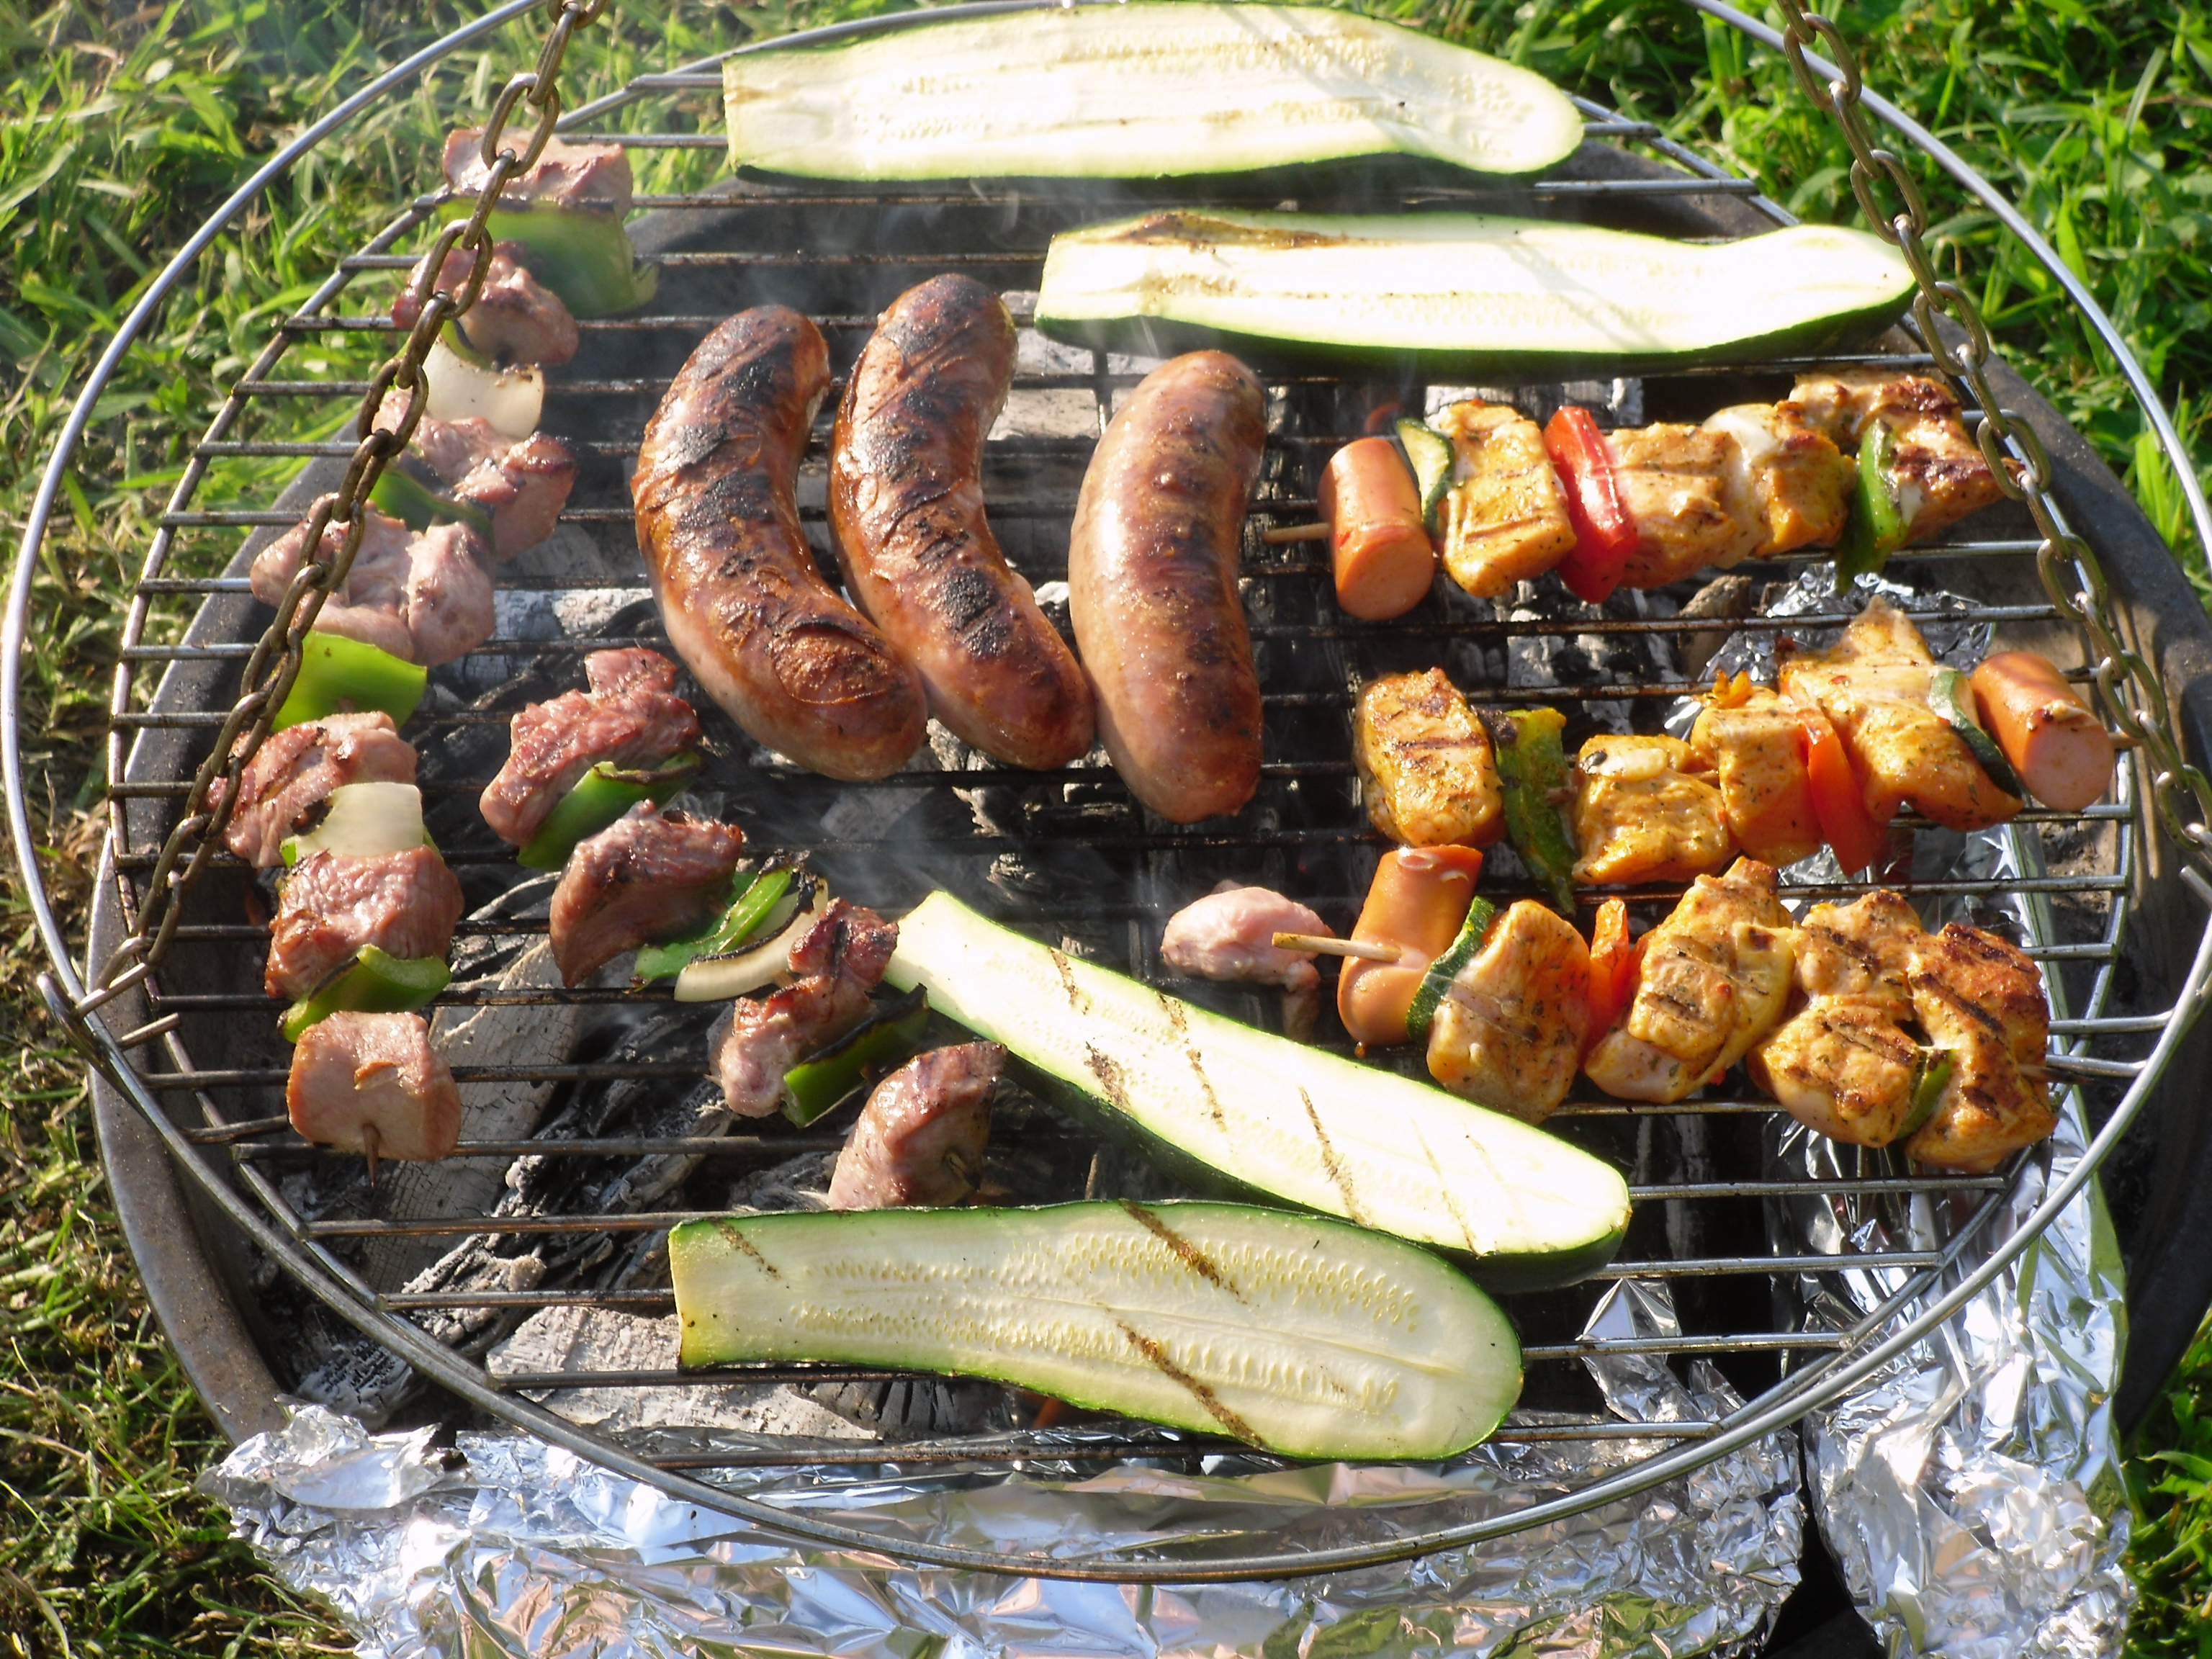 File:Barbecue 10.JPG - Wikimedia Commons